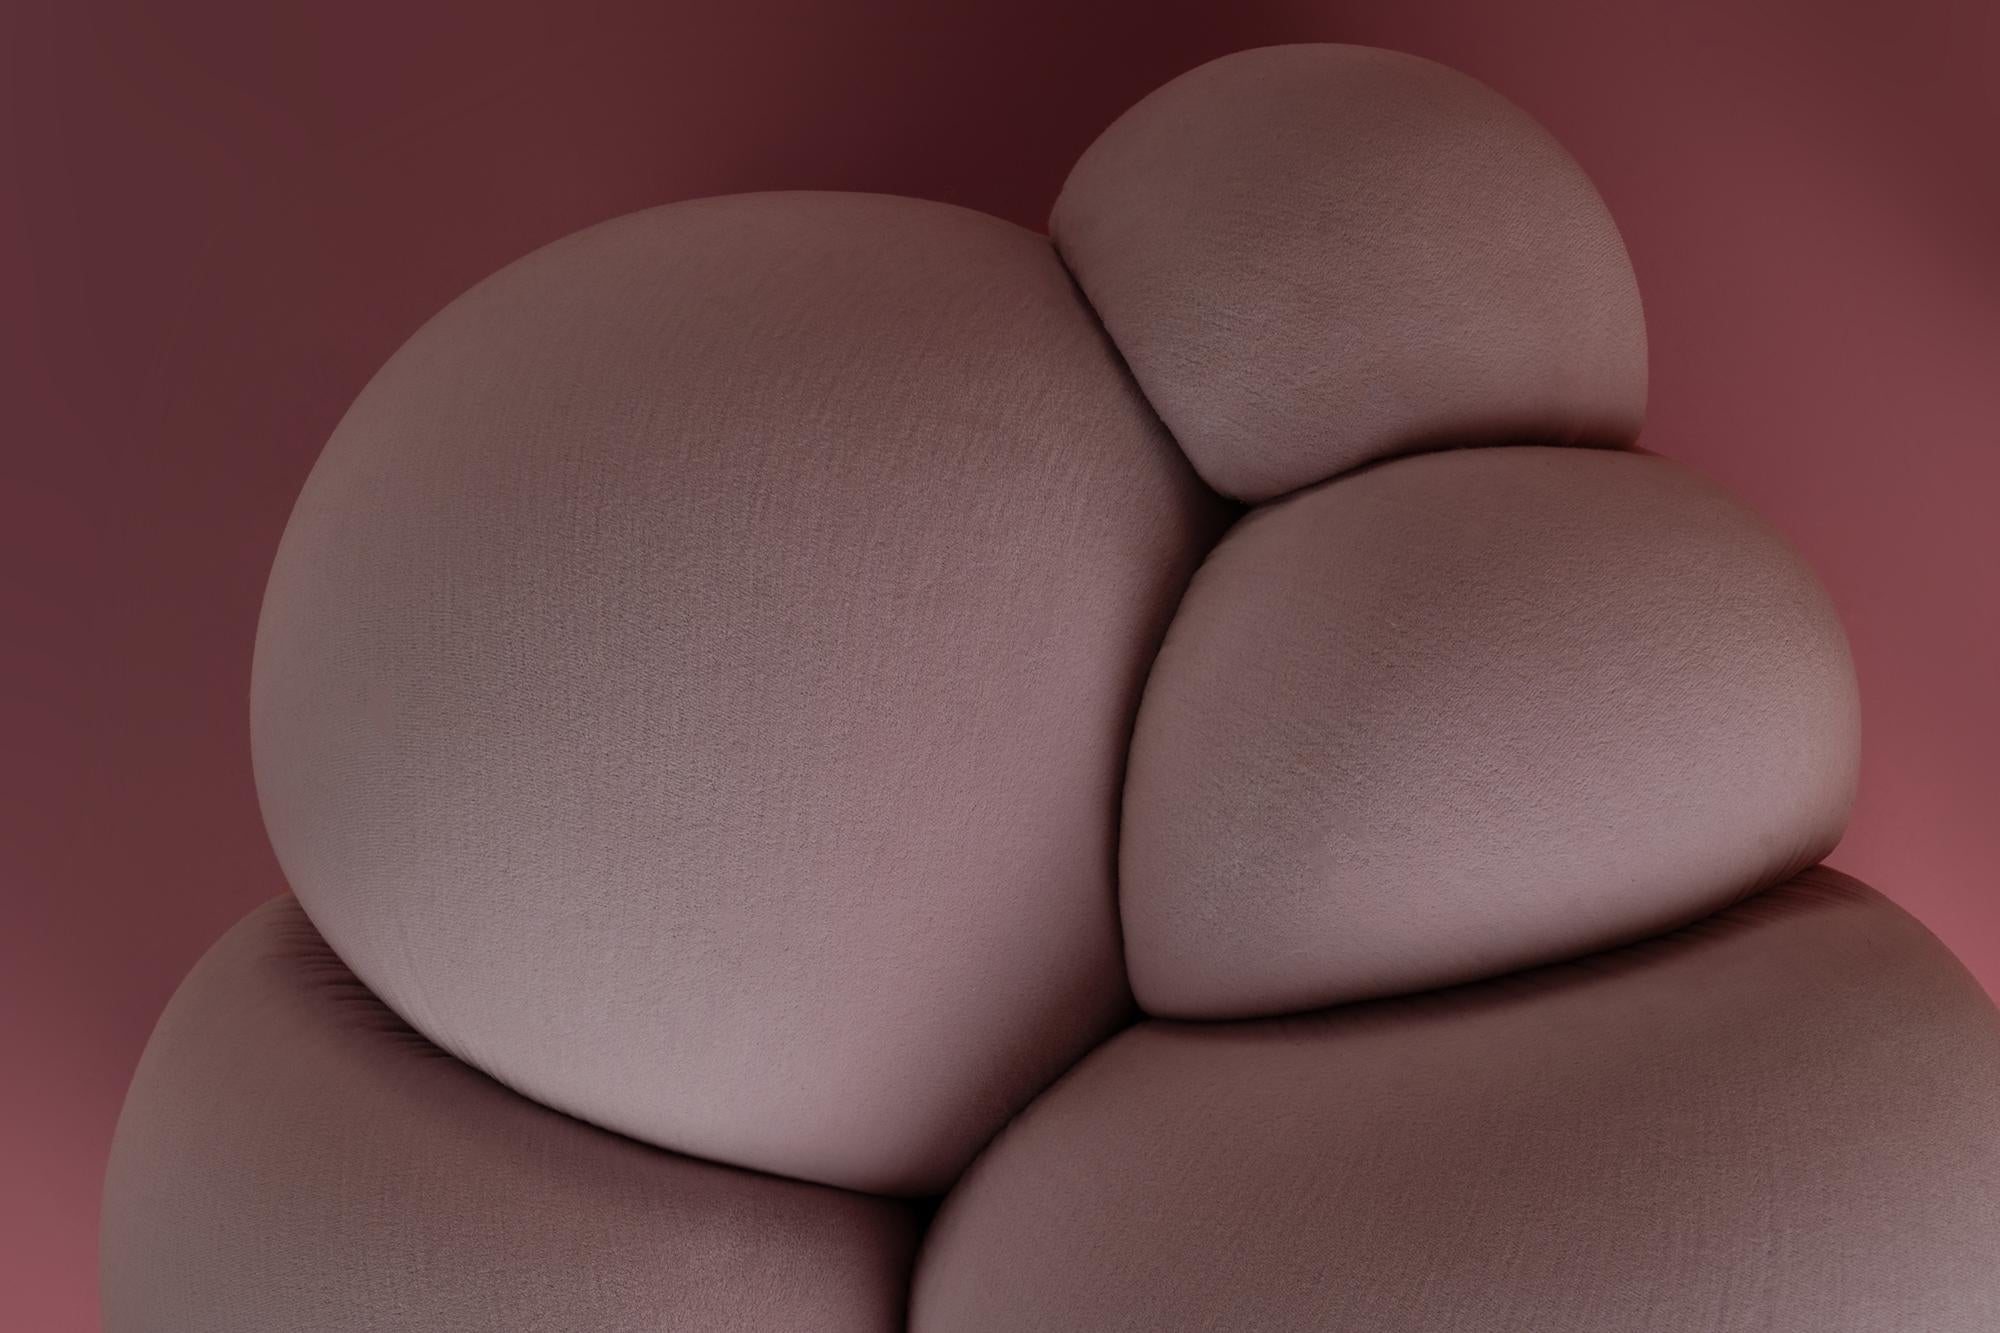 Portuguese Peaches Pouffe by Lara Bohinc, Pink Wool Fabric, Organic Shape, stool For Sale